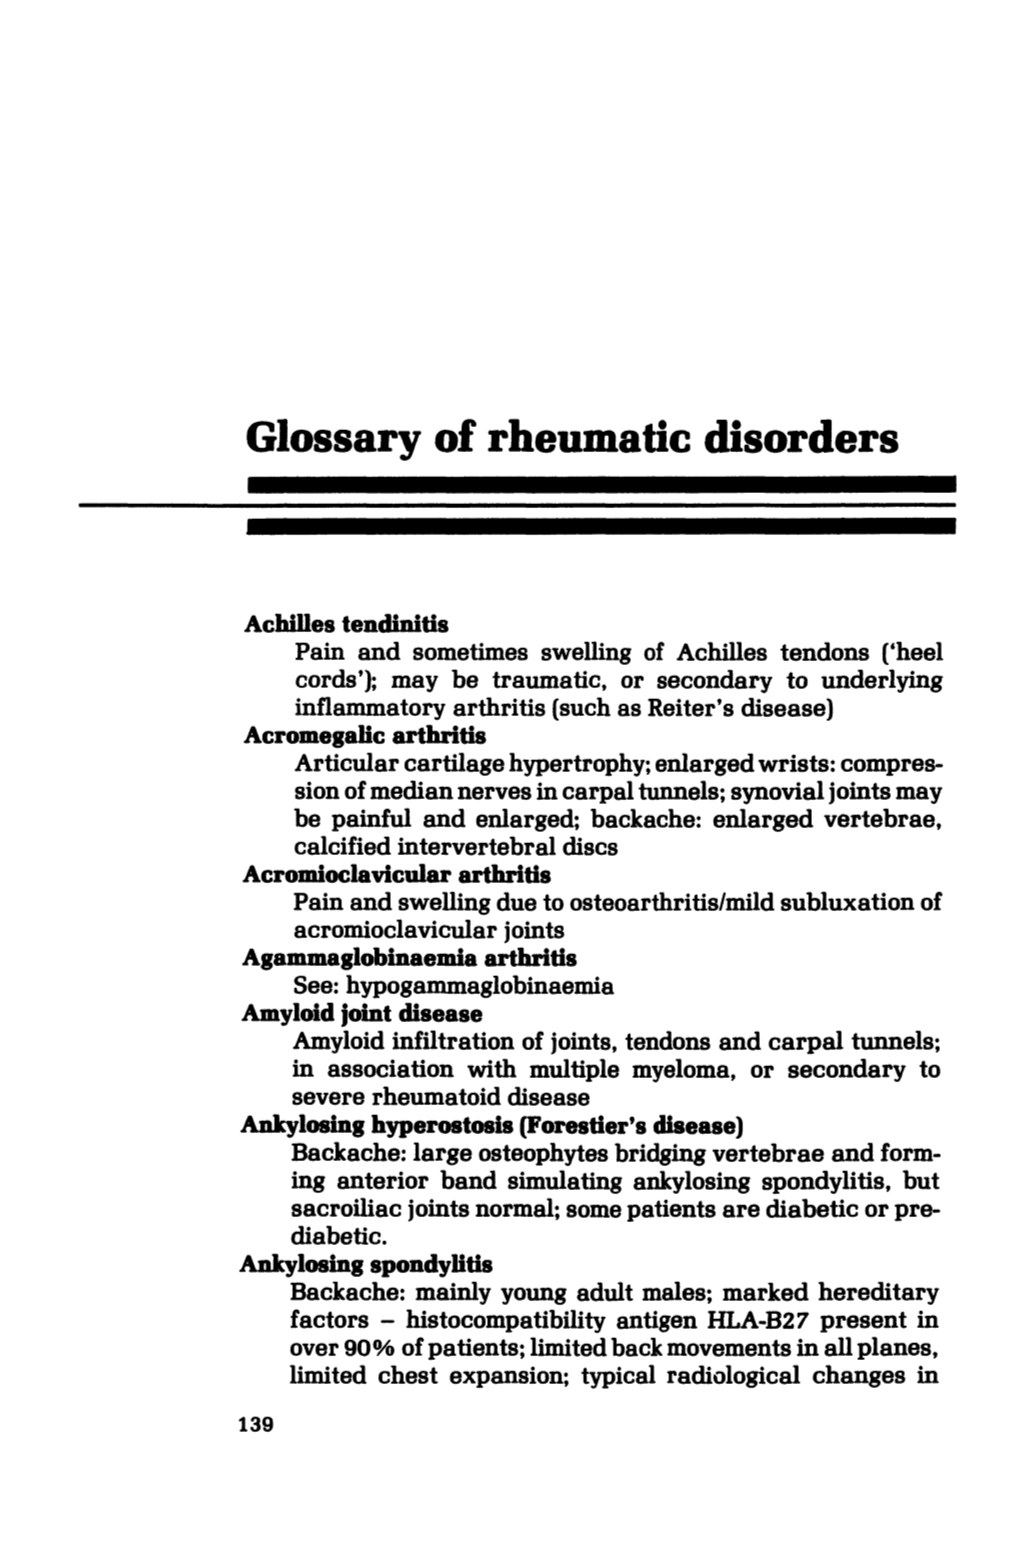 Glossary of Rheumatic Disorders